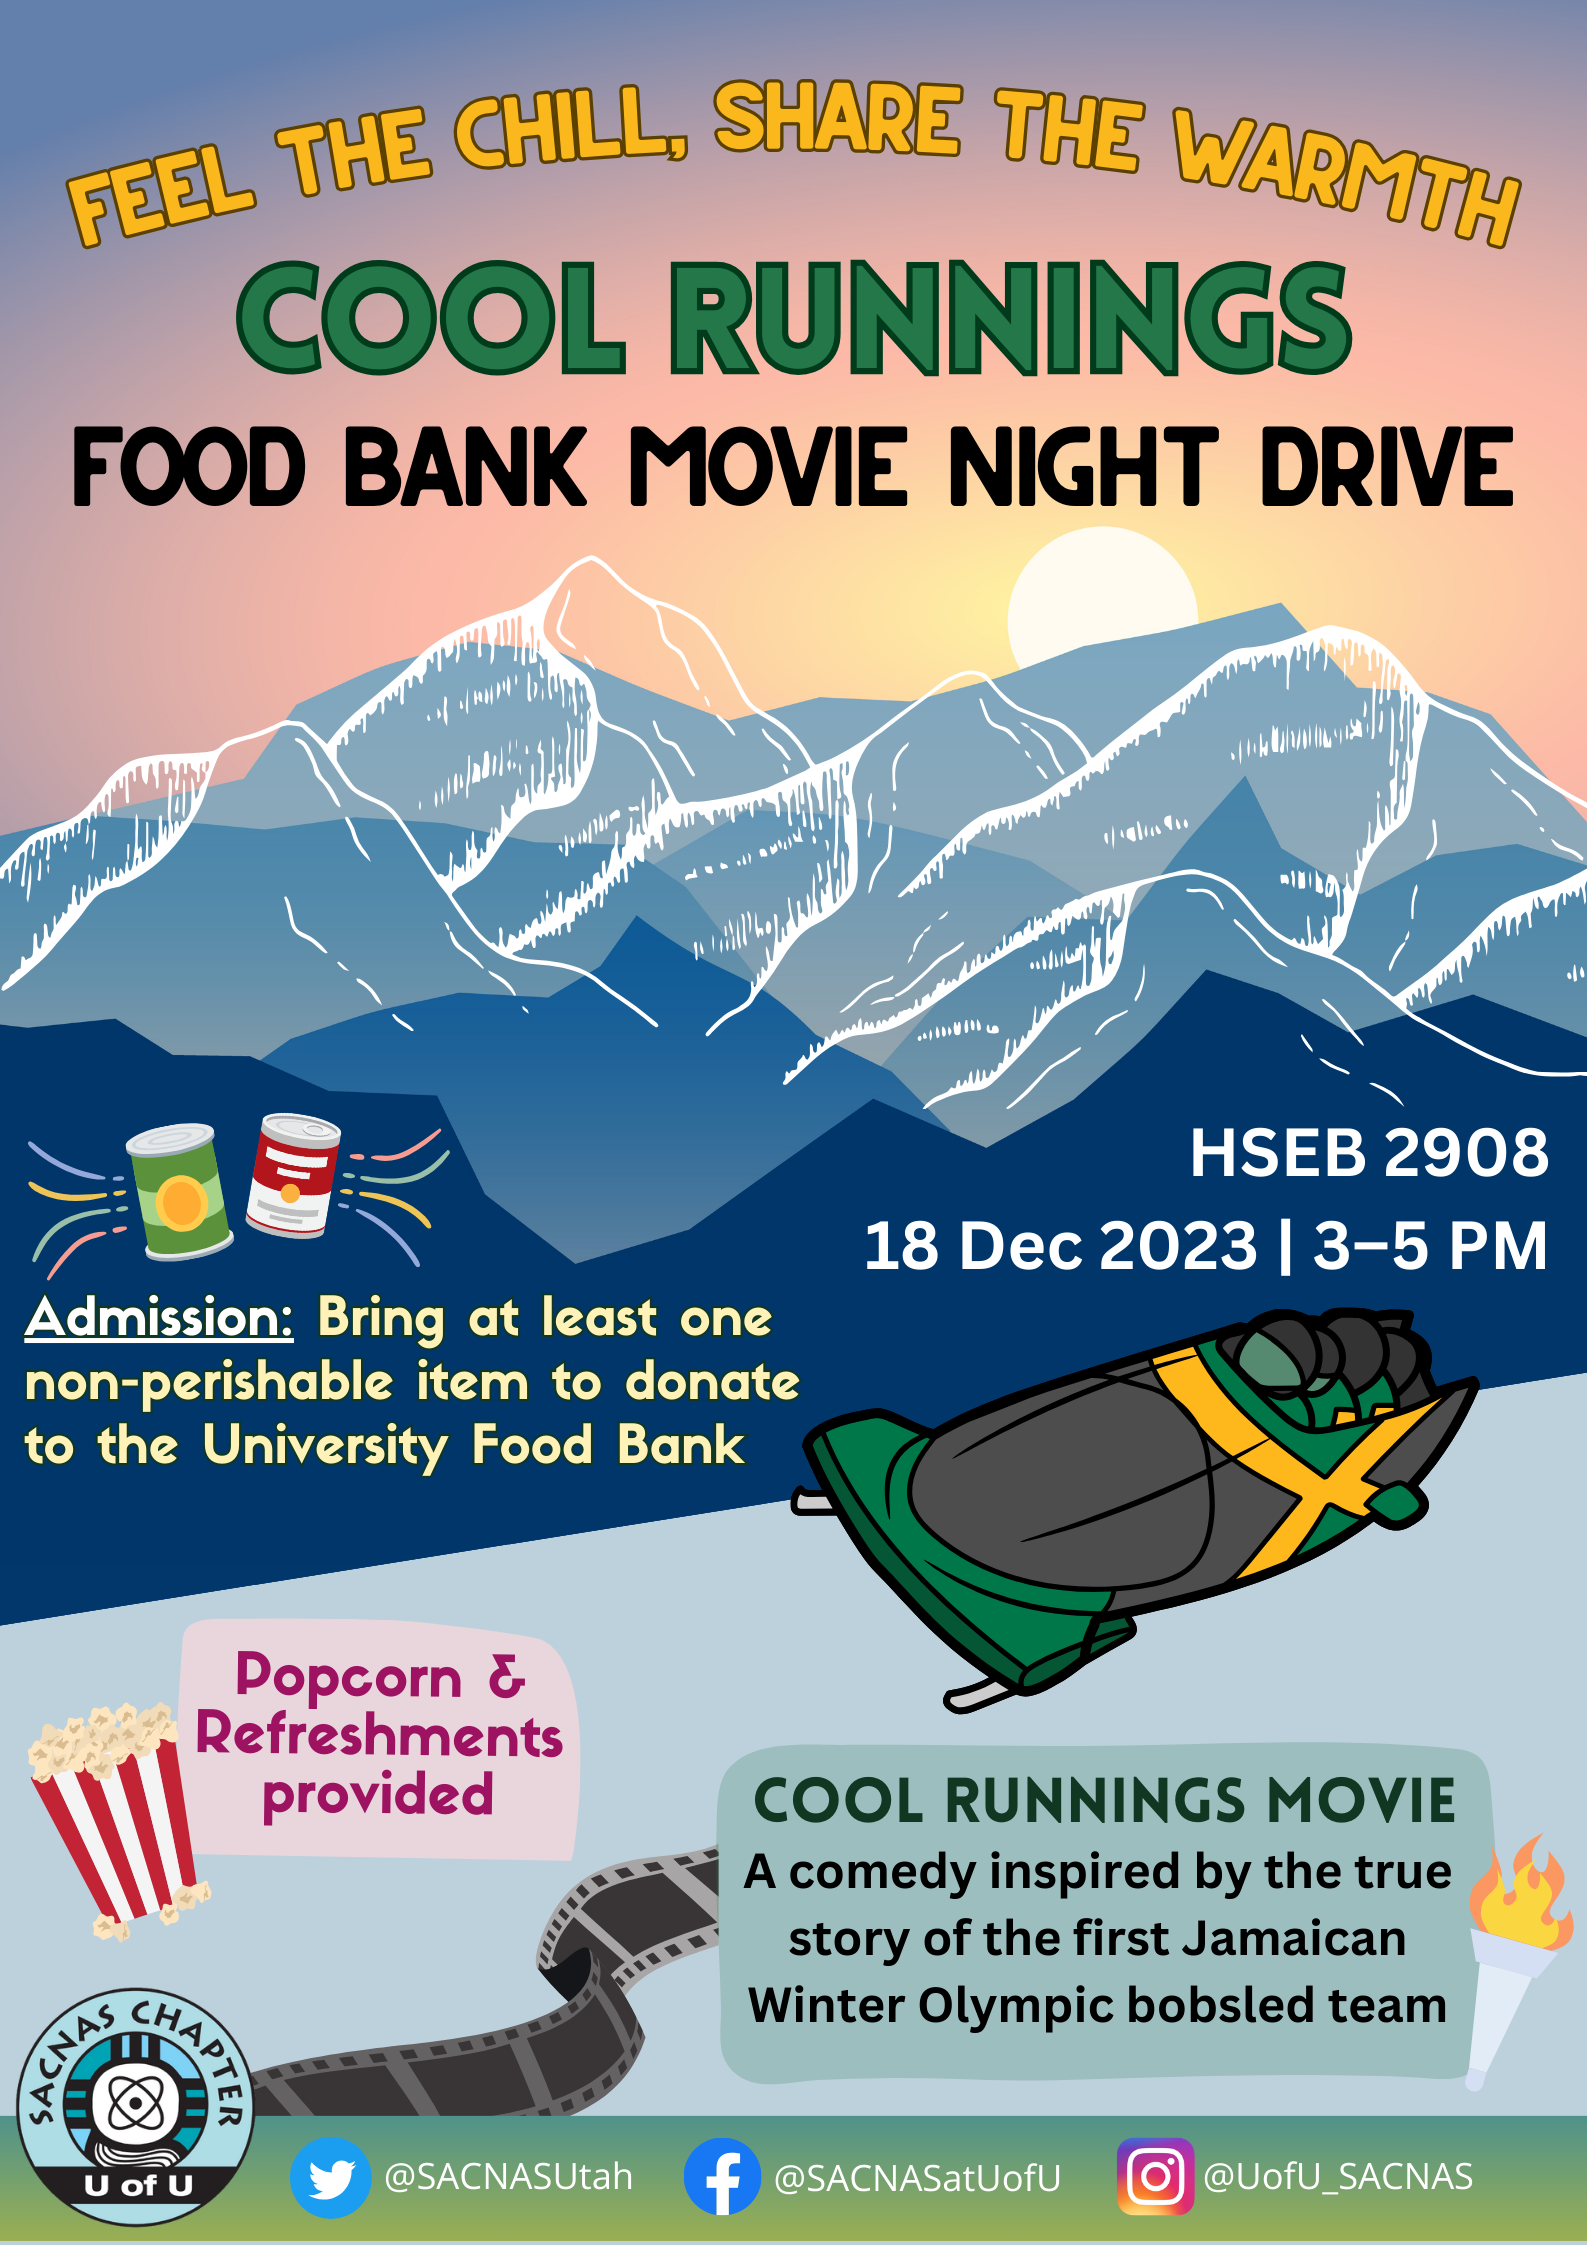 Food Bank Movie Night Drive